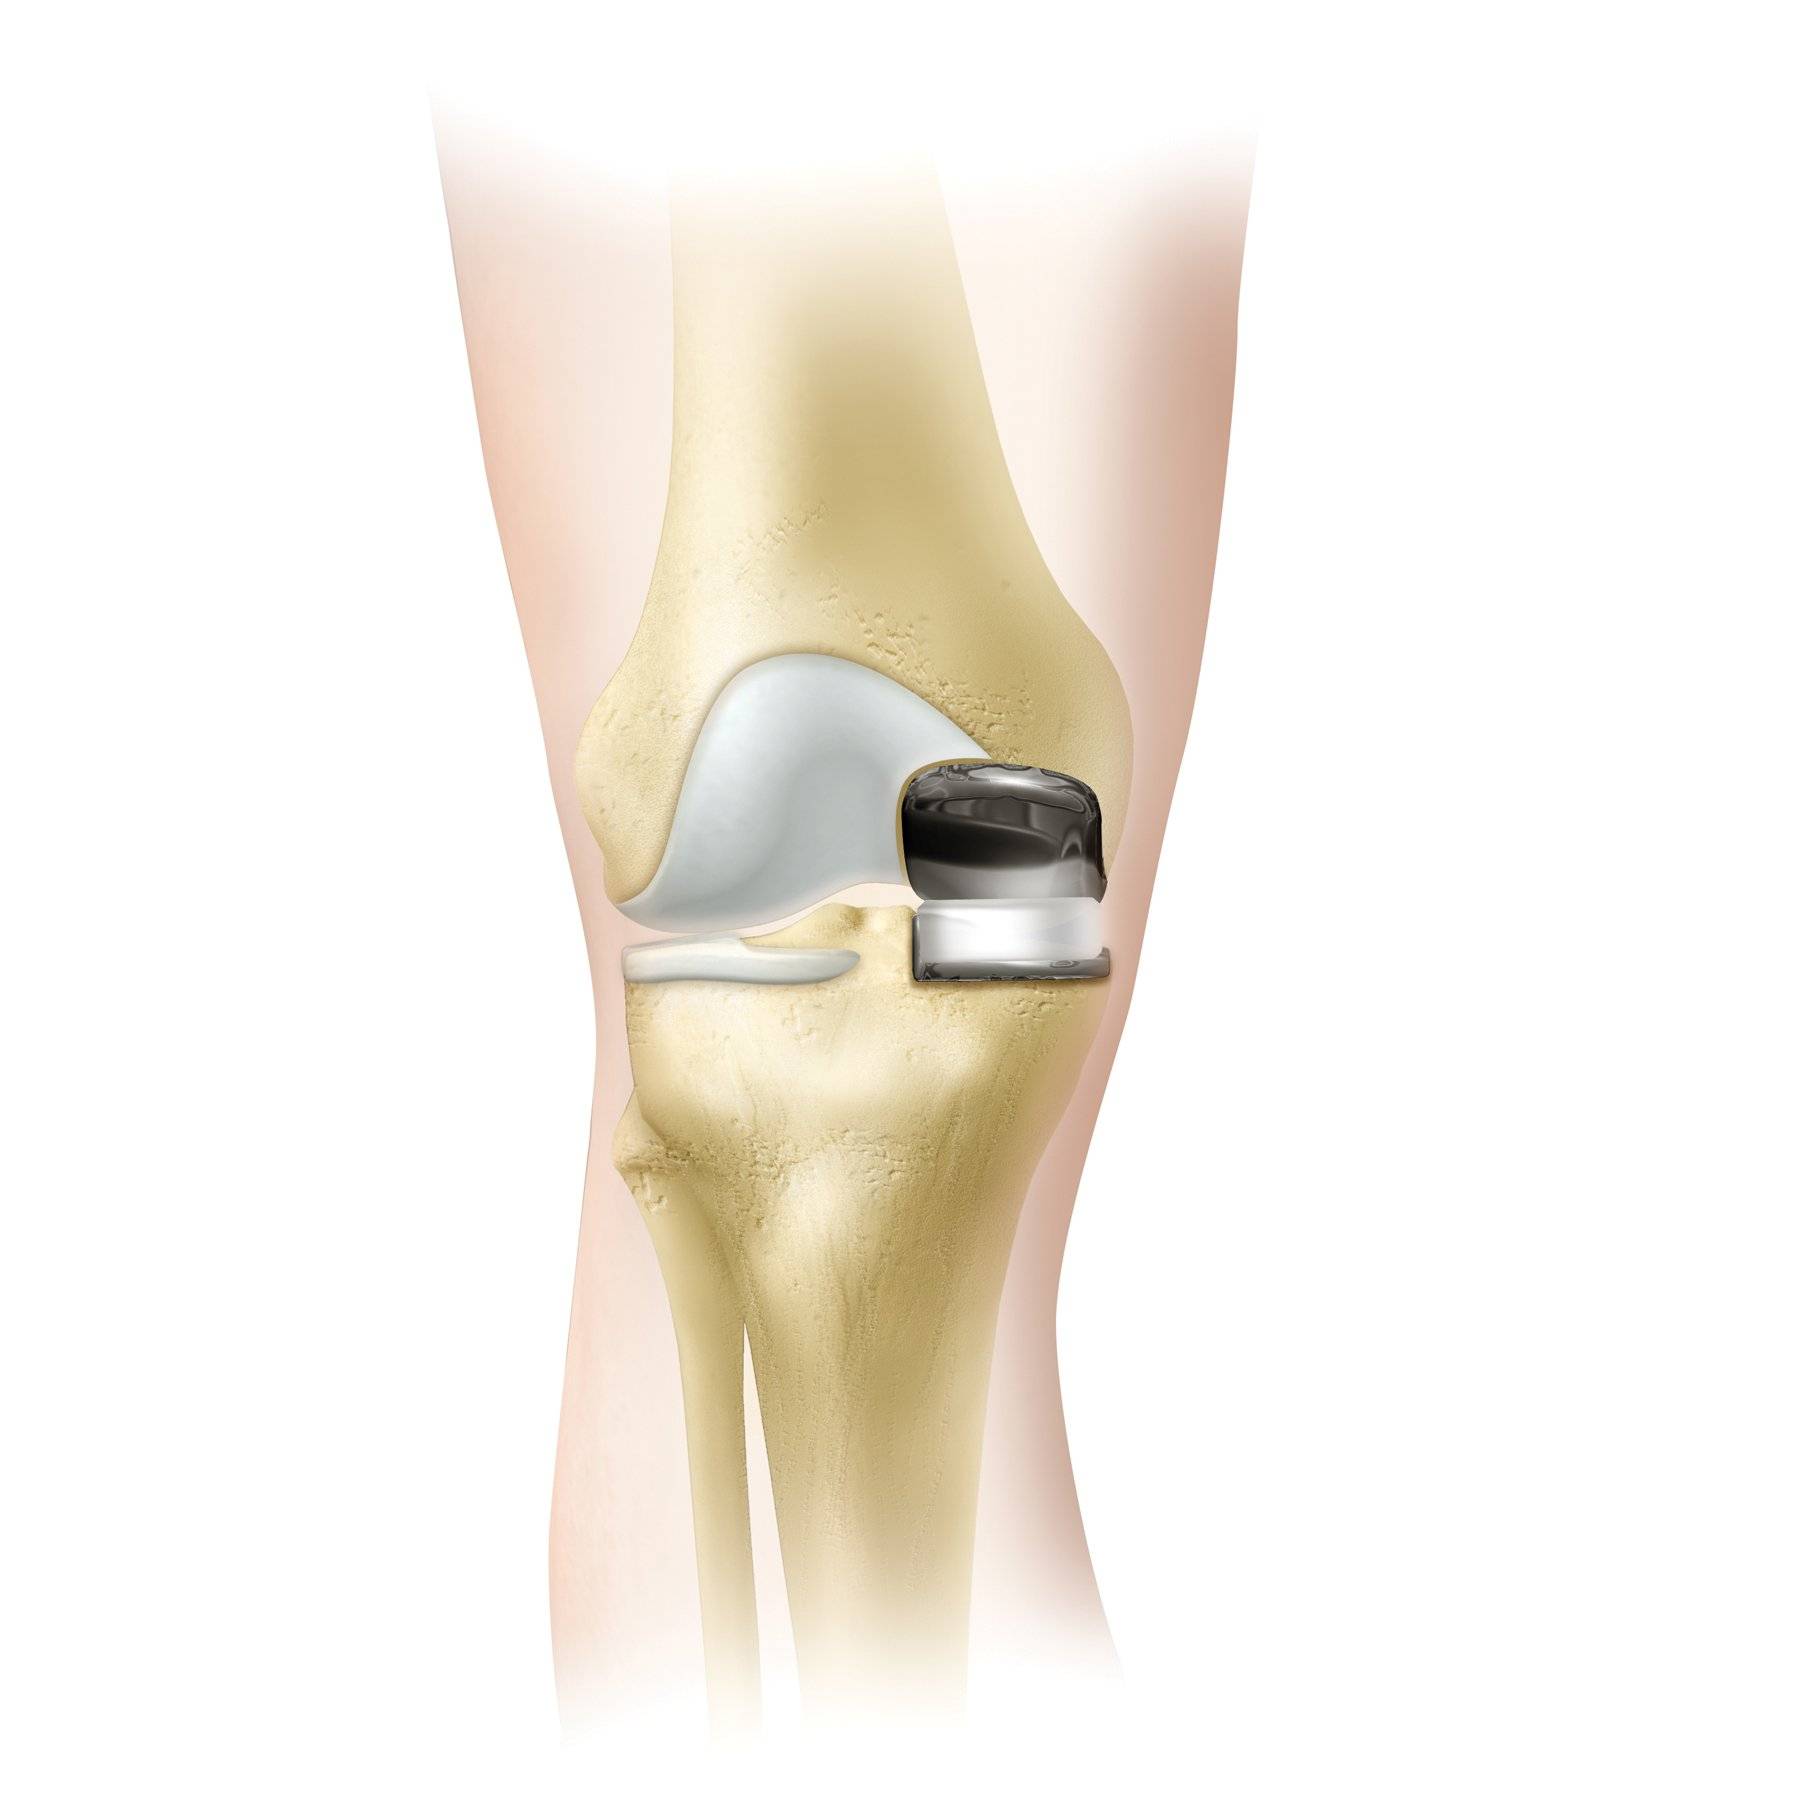 Операция по замене сустава на ноге. Коленный эндопротез Зиммер. Эндопротез коленного сустава. Эндопротез Зиммер коленного сустава. Артропластика коленного сустава.